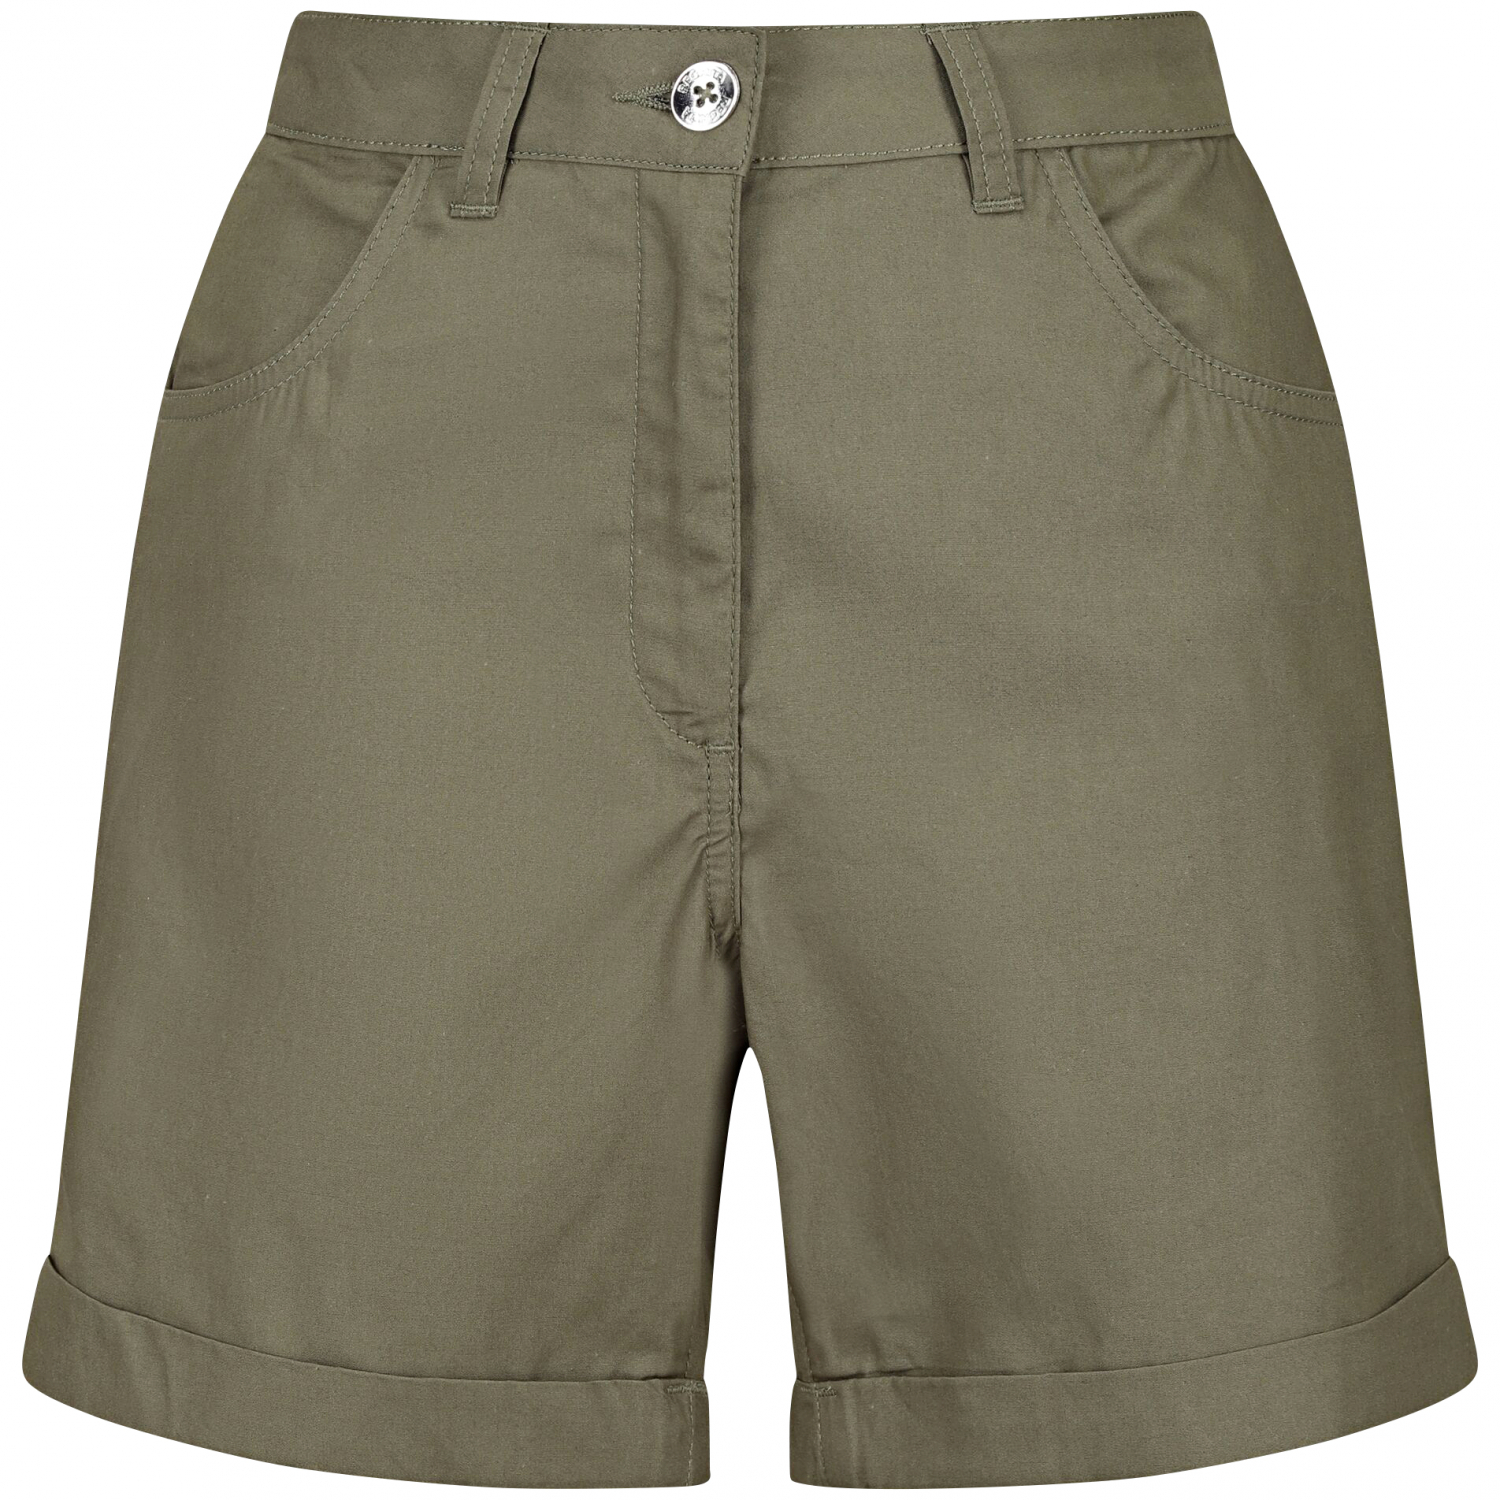 https://images.askari-sport.com/en/product/1/large/regatta-womens-shorts-pemma-four-leaf.jpg